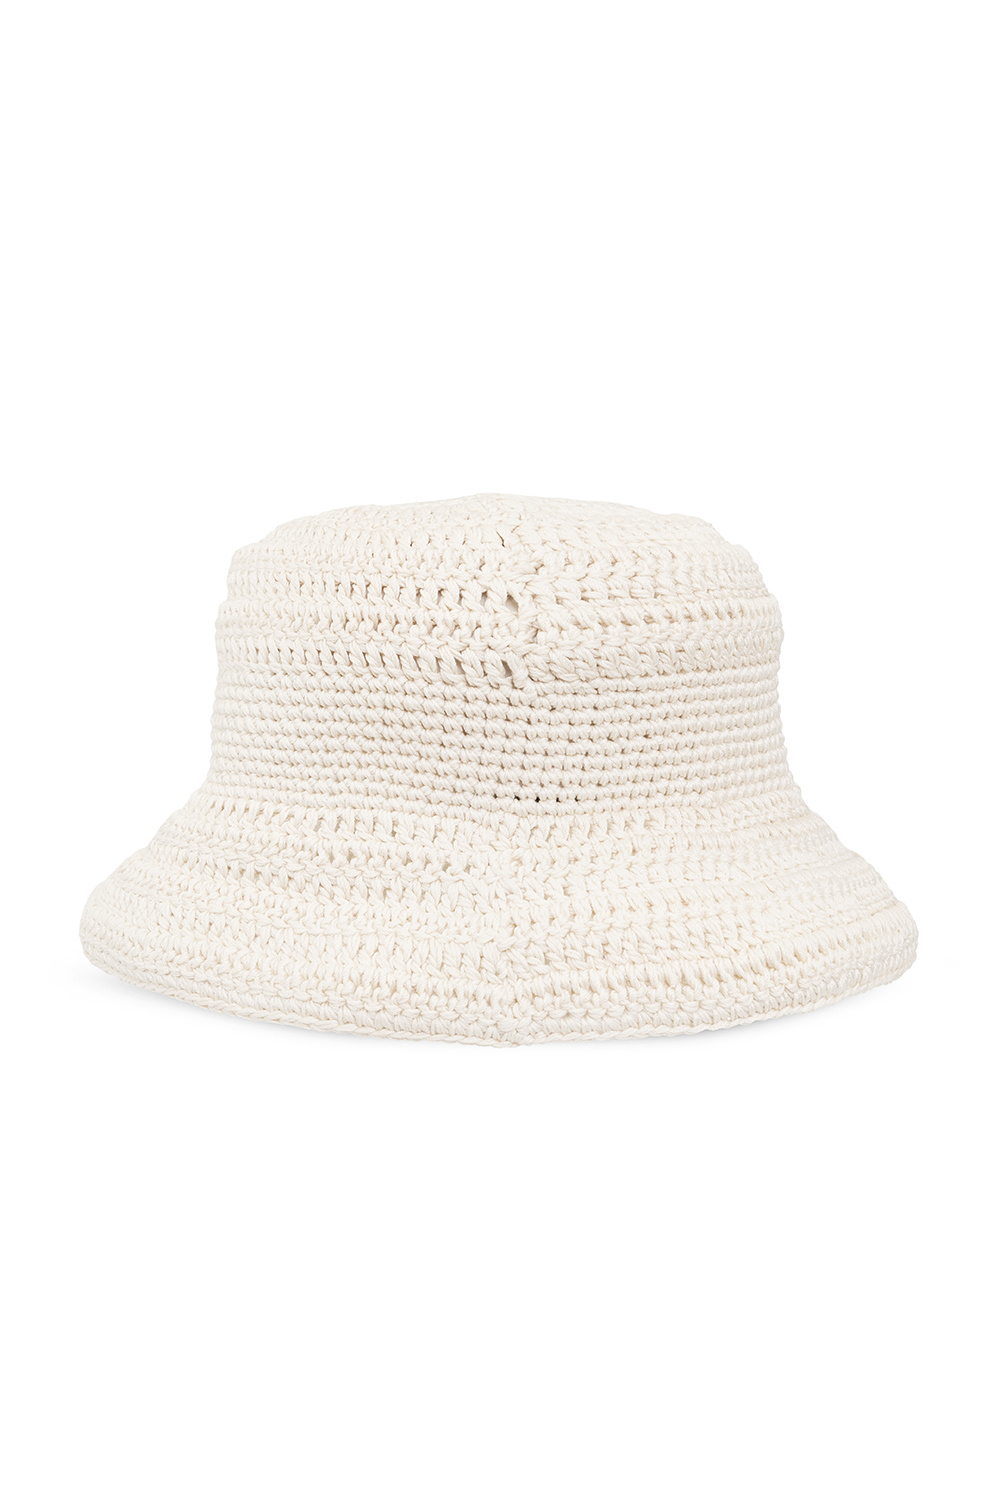 Fendi BARROW logo-print bucket hat